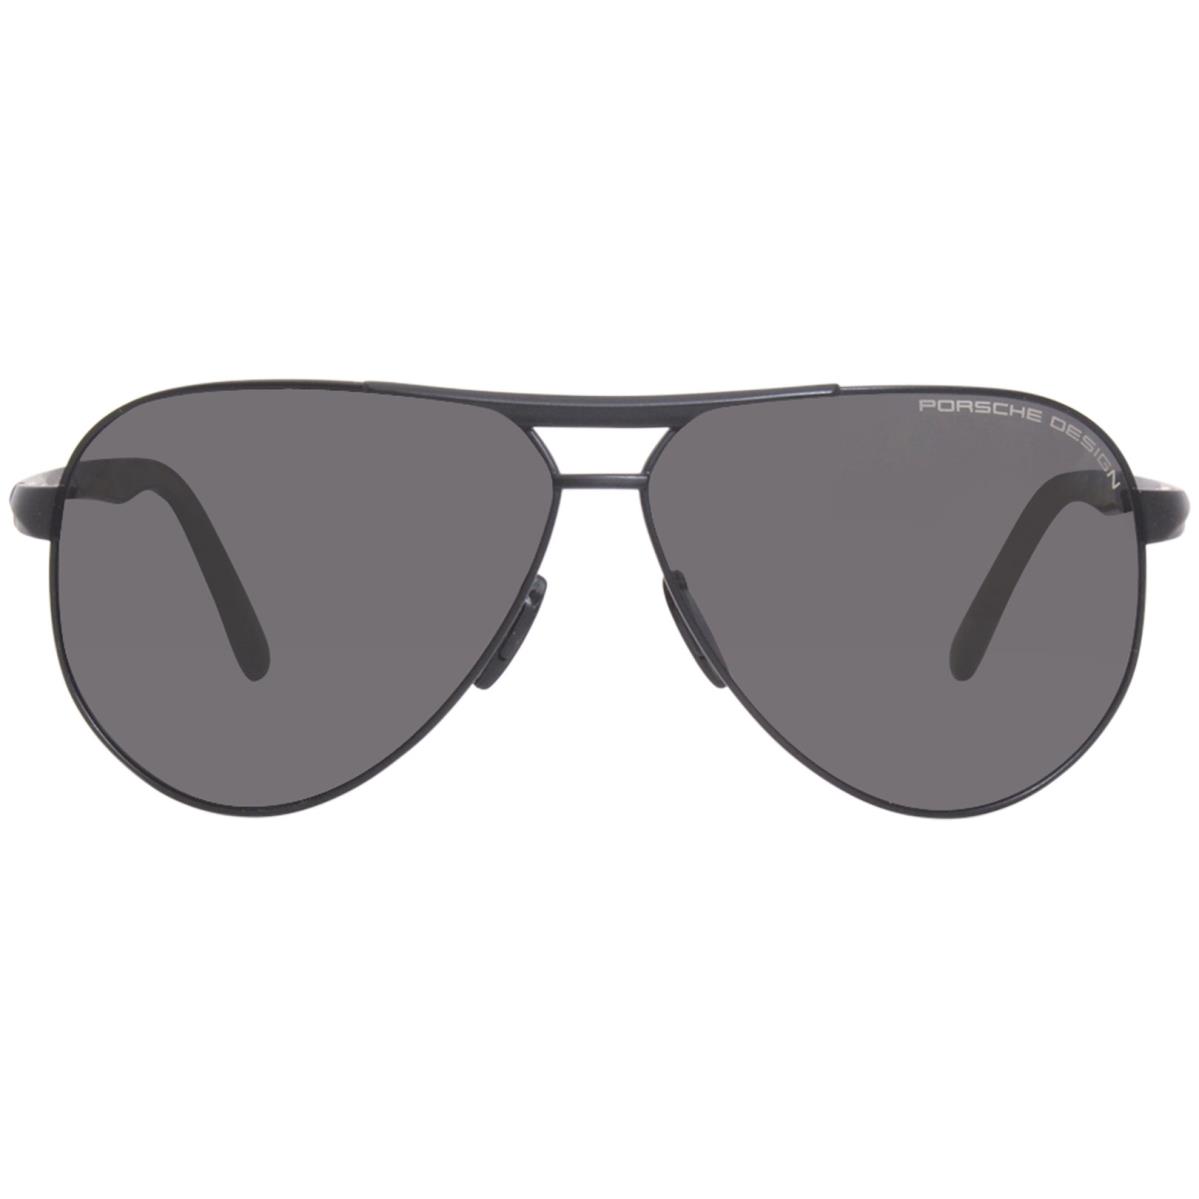 Porsche Design P8649 Sunglasses Men`s Square Shape